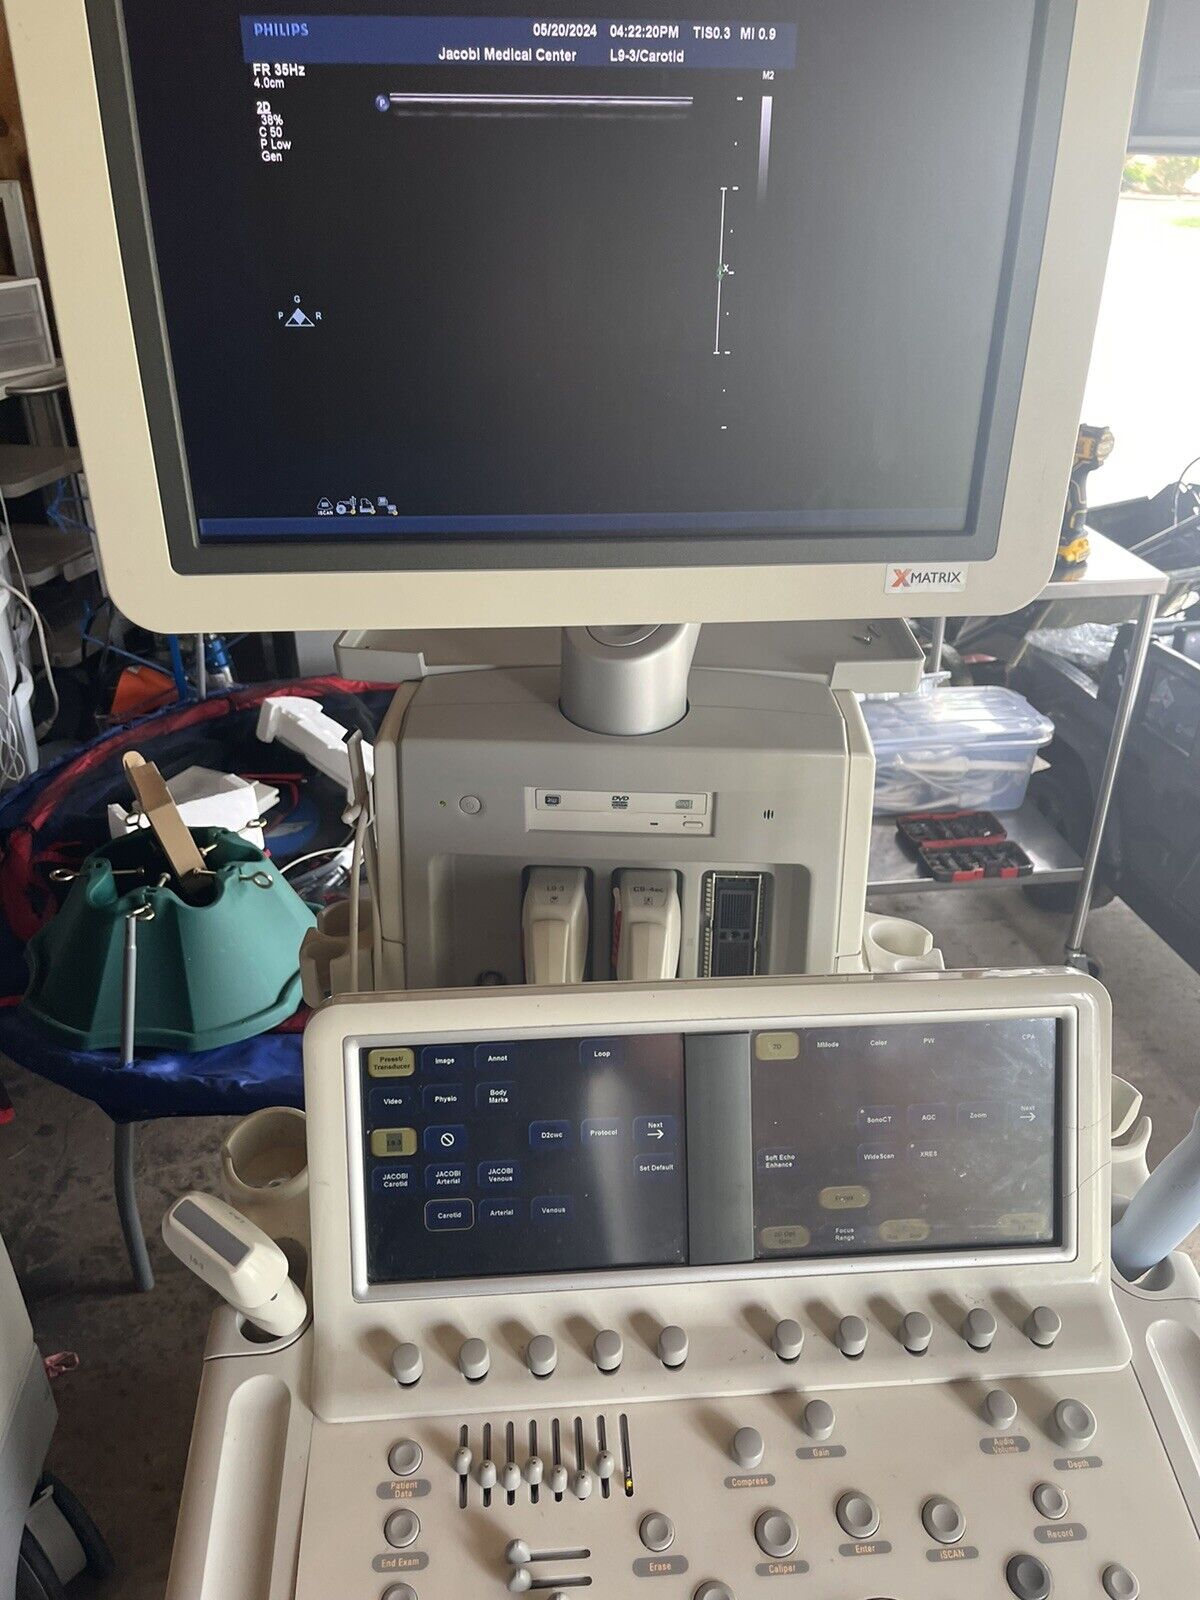 Philips iE33 xMatrix Ultrasound System With 2 Probe